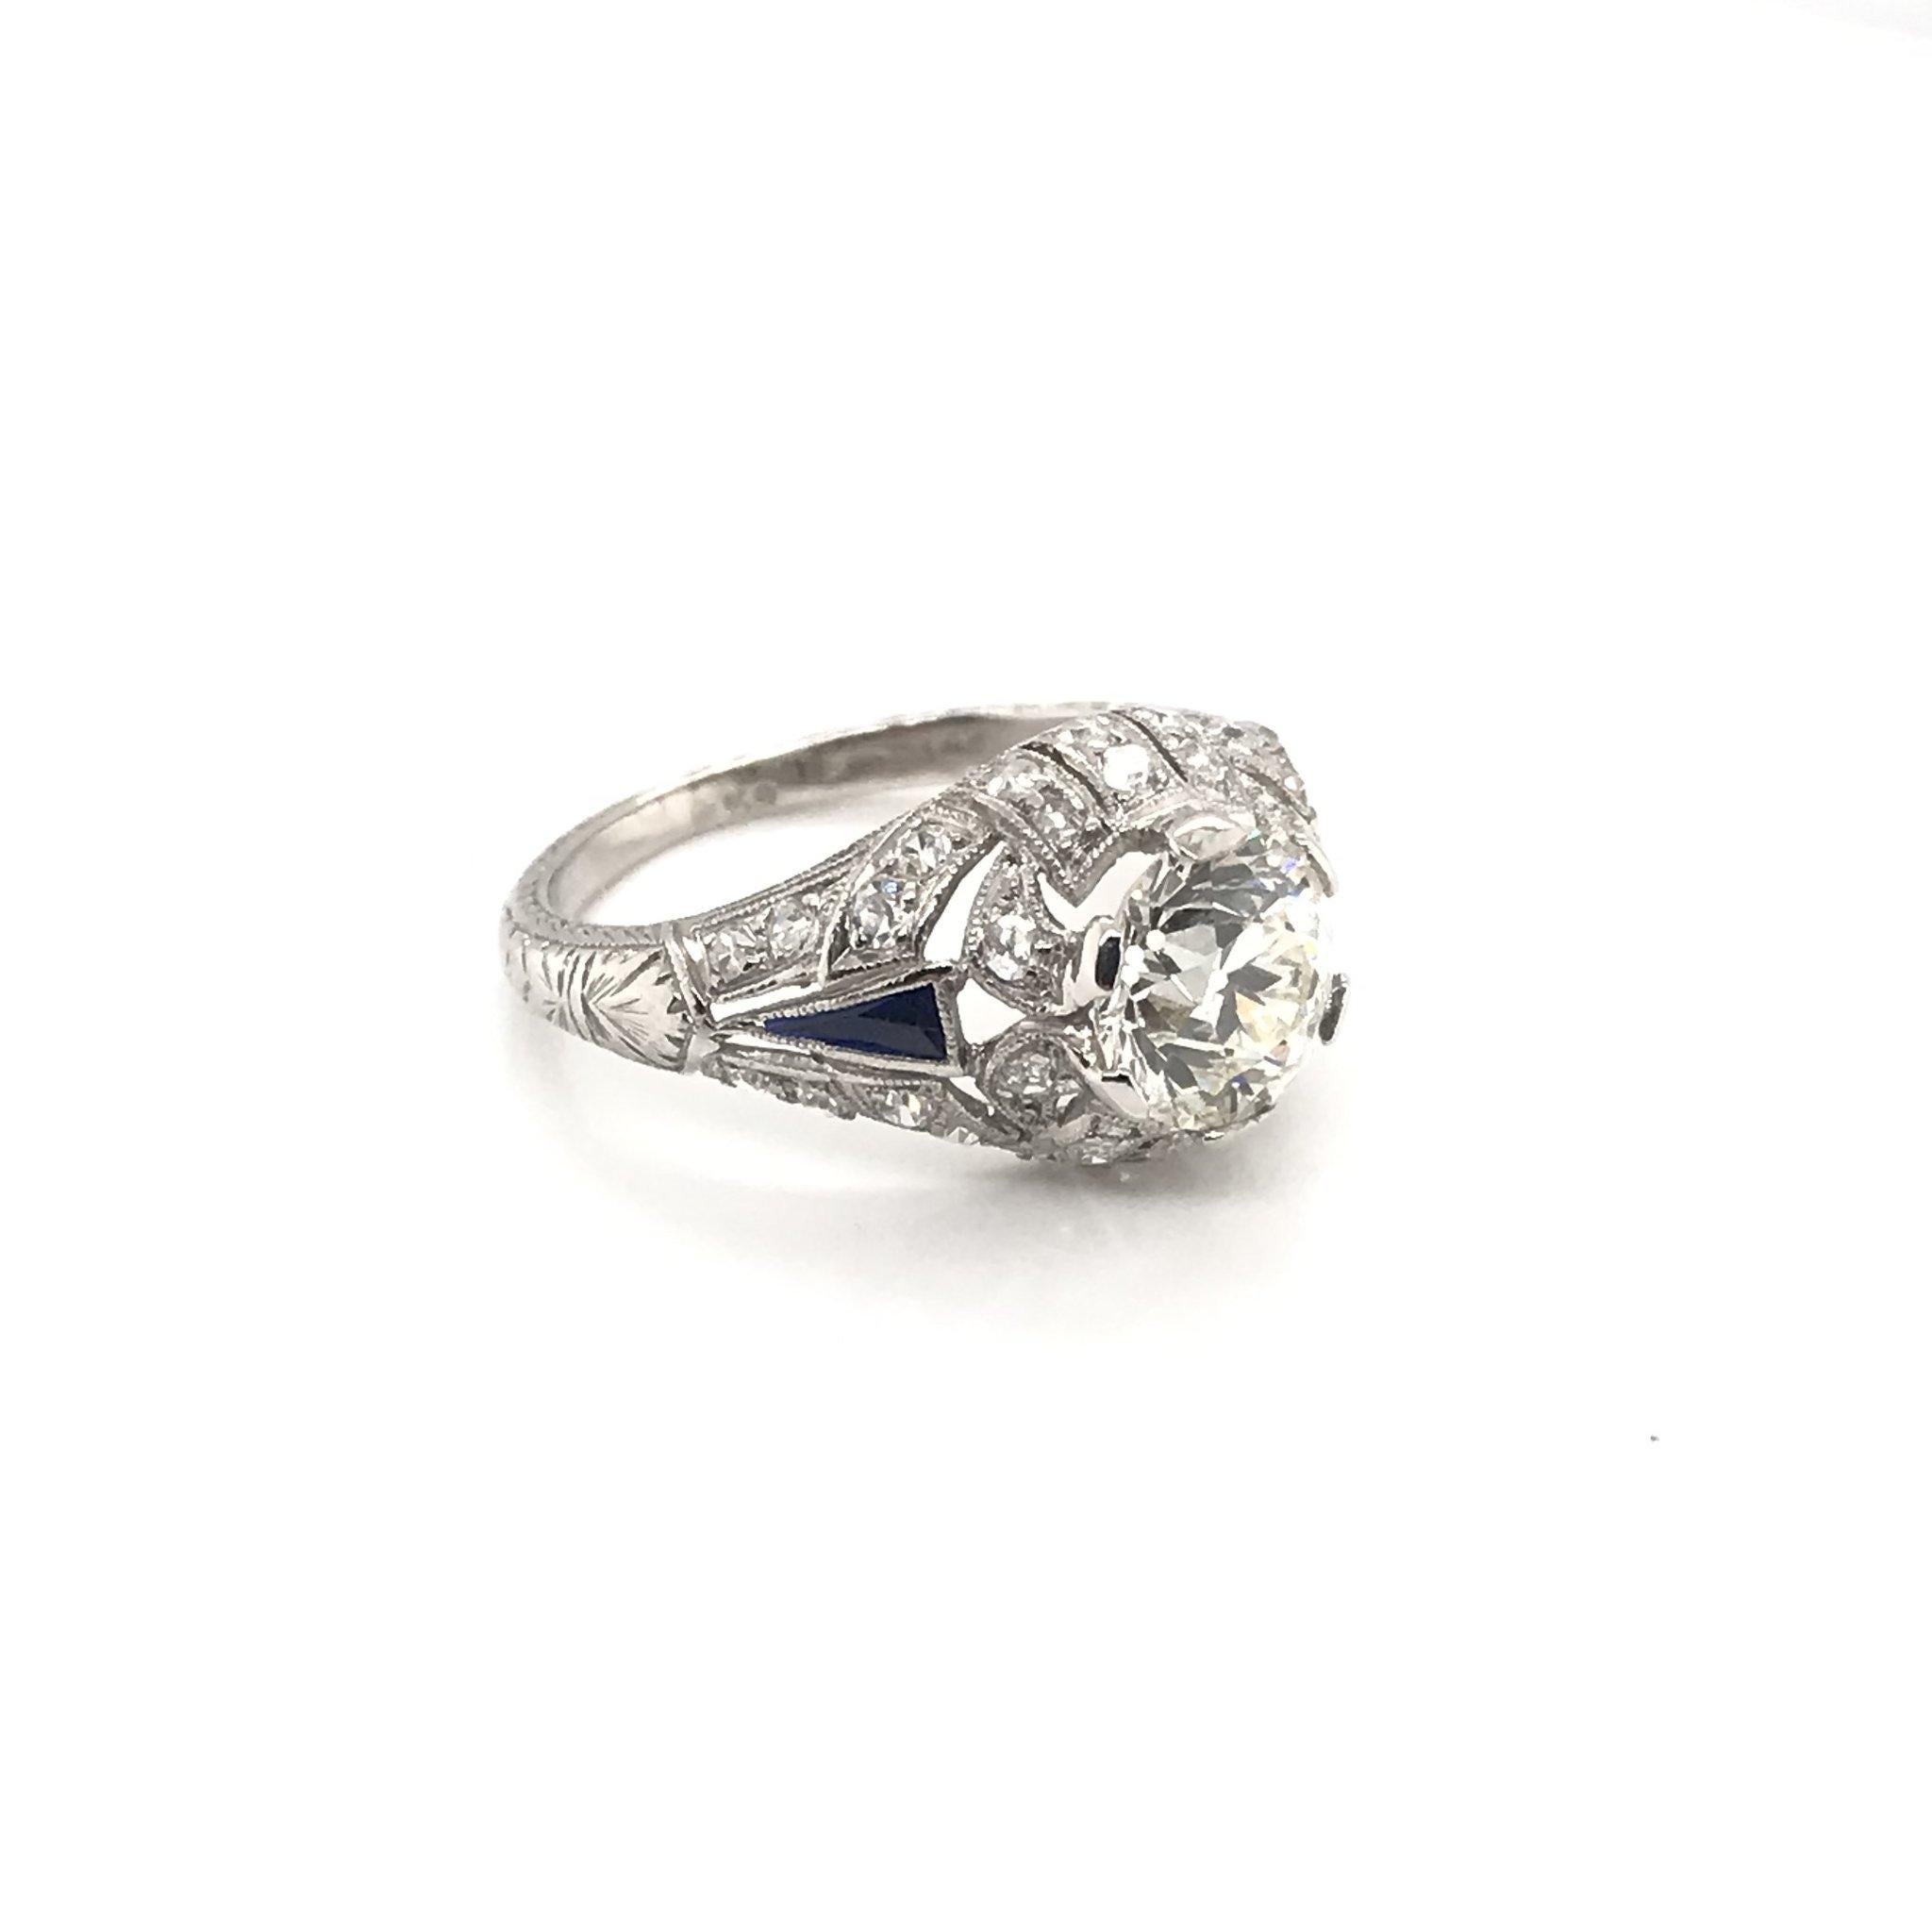 Women's Art Deco 1.39 Carat Diamond and Sapphire Engagement Ring